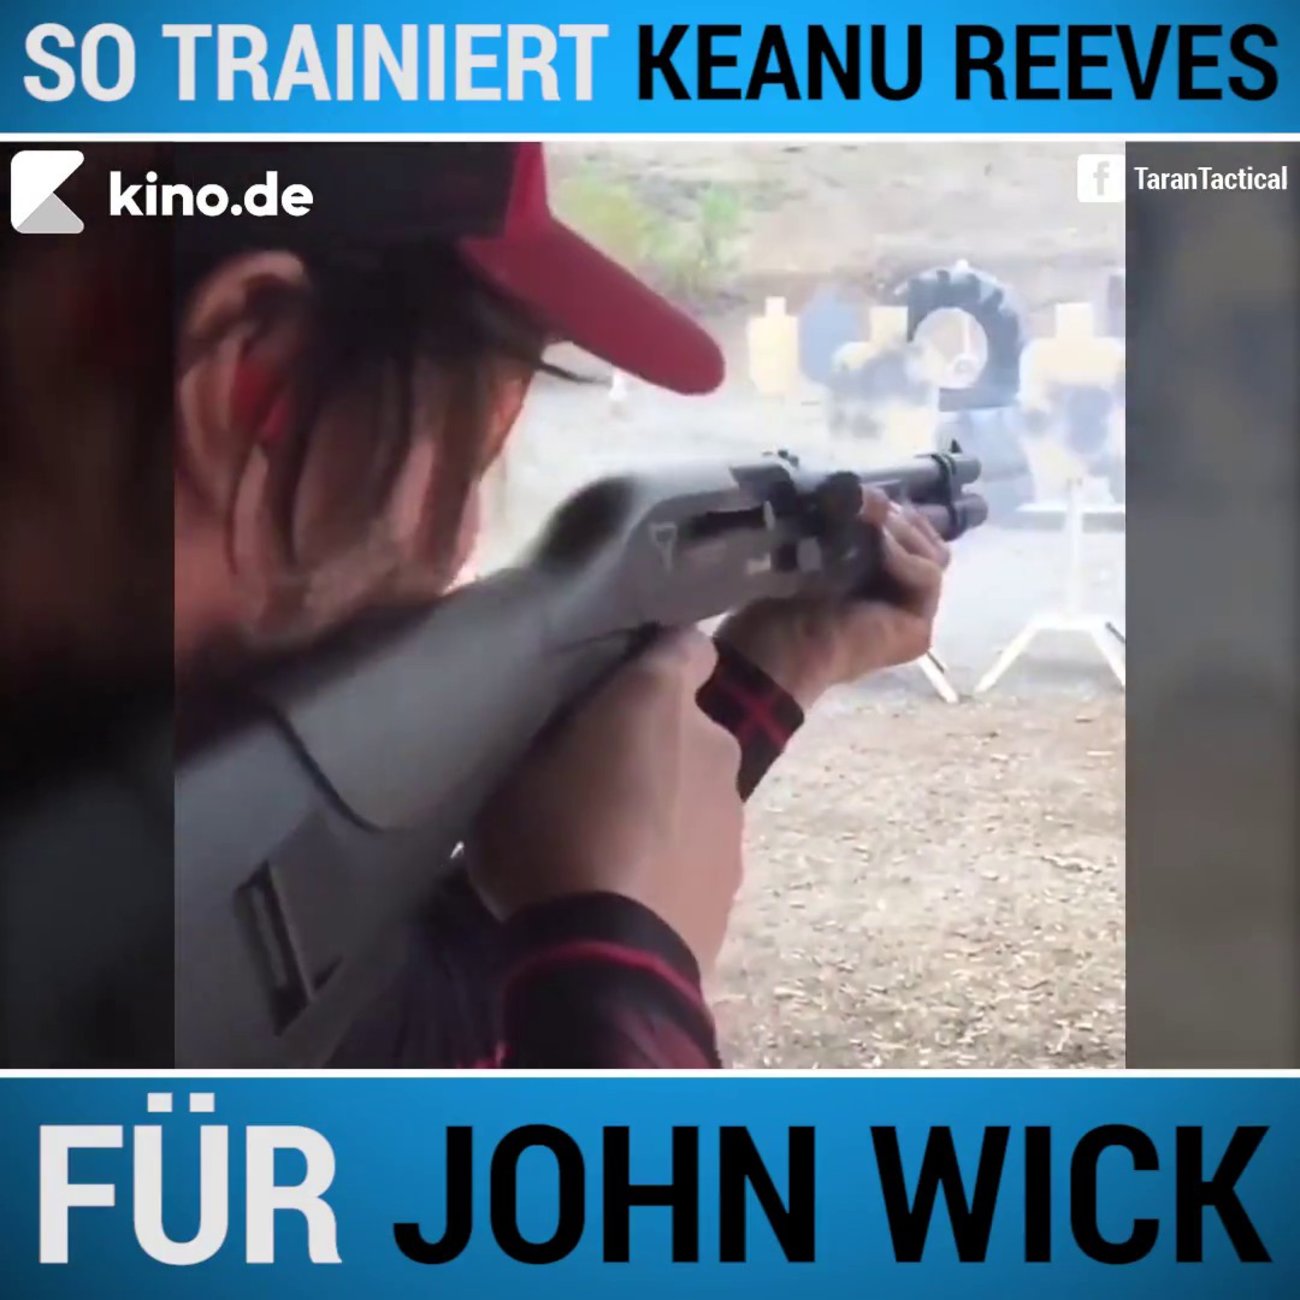 Keanu Reeves trainiert für John Wick - Video